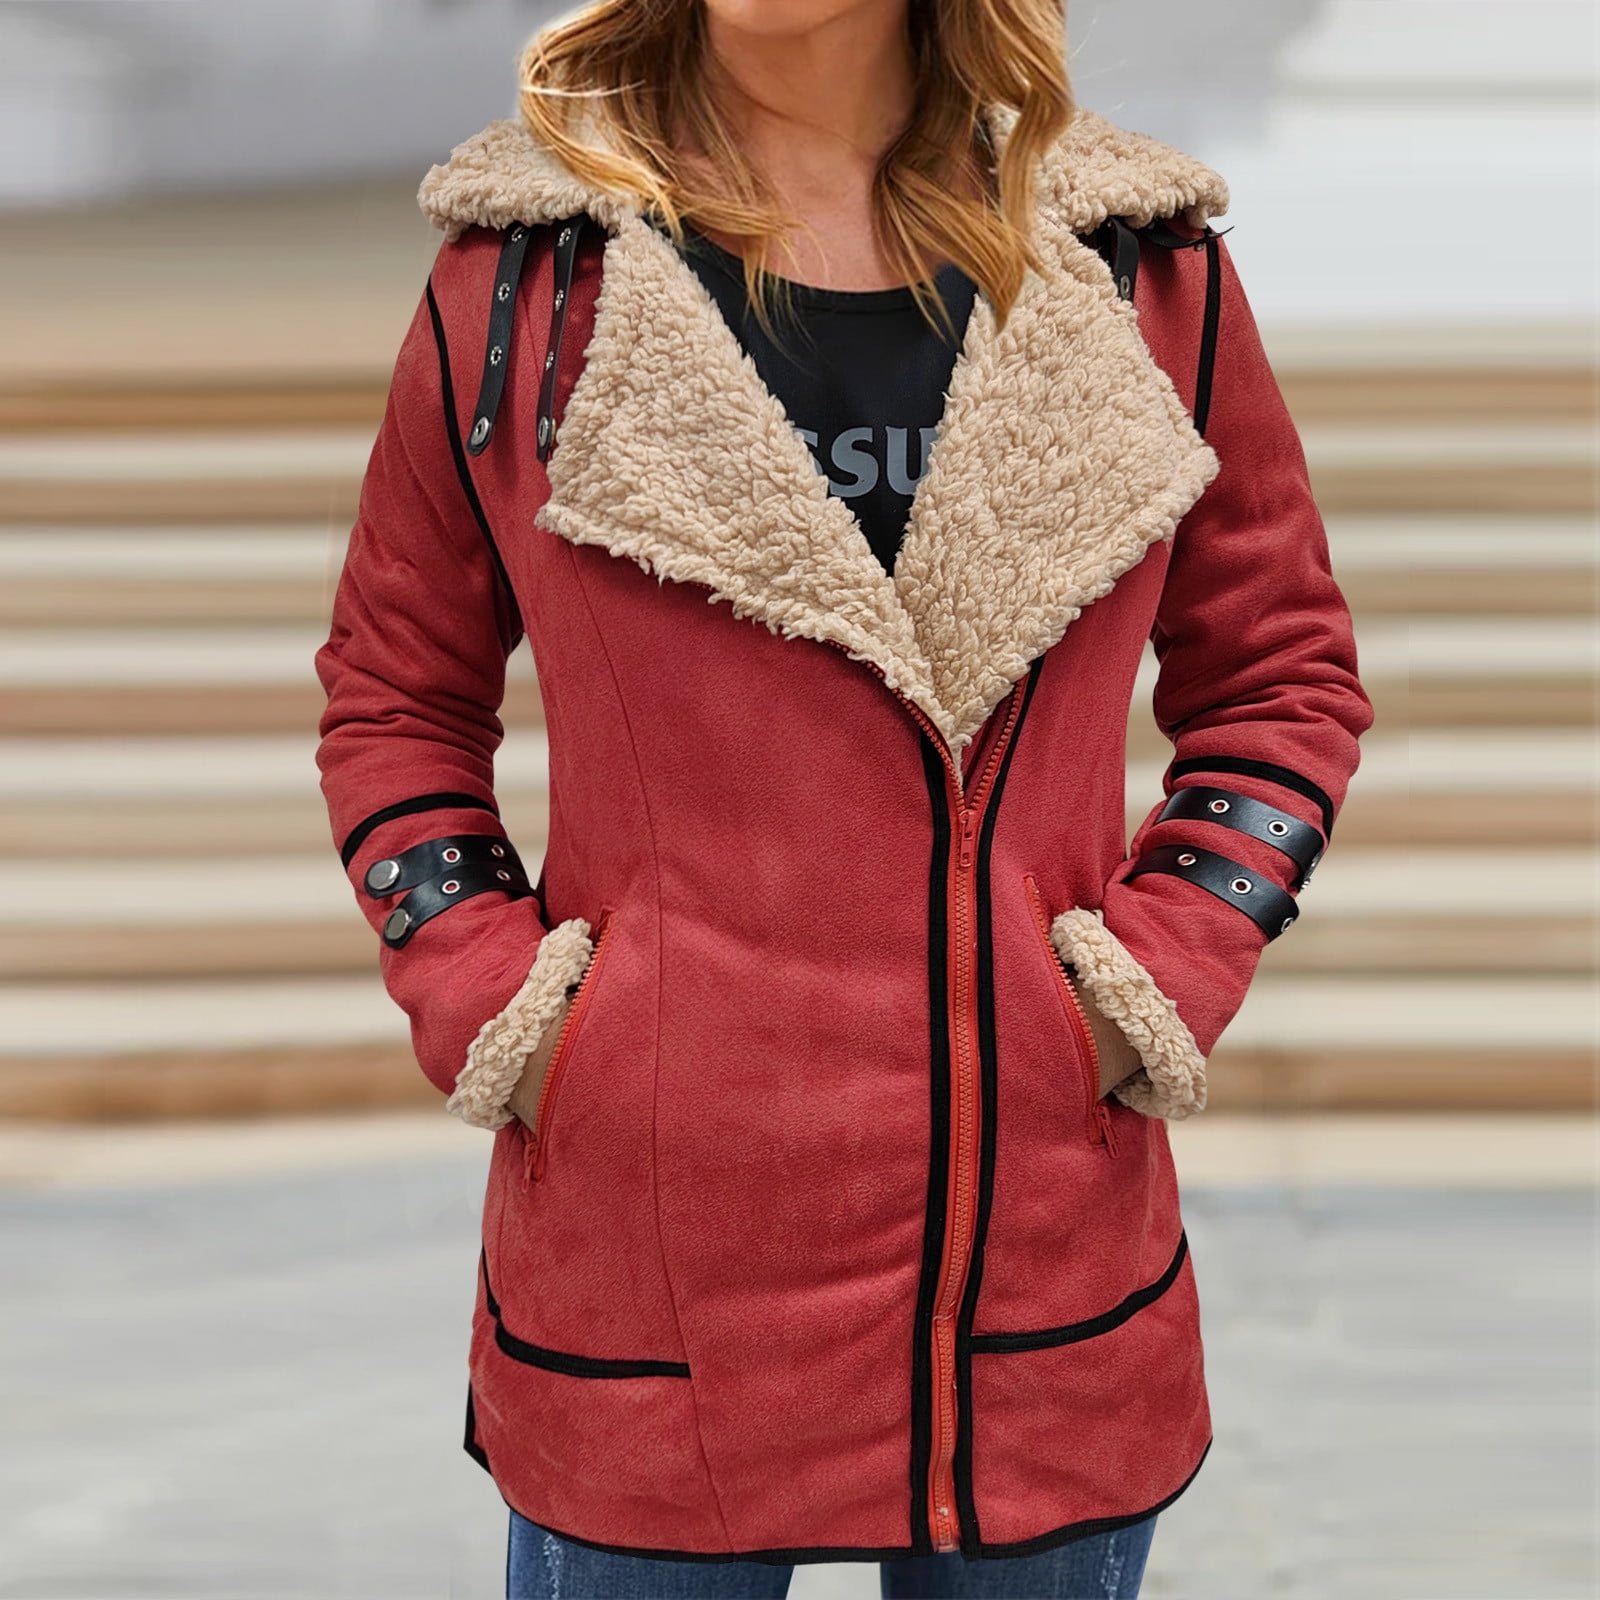 Pgeraug for women Men Plus Size Coat Lapel Collar Long Sleeve Padded Leather Jacket Thicken Coat Sheepskin coats for women Red L Walmart.com